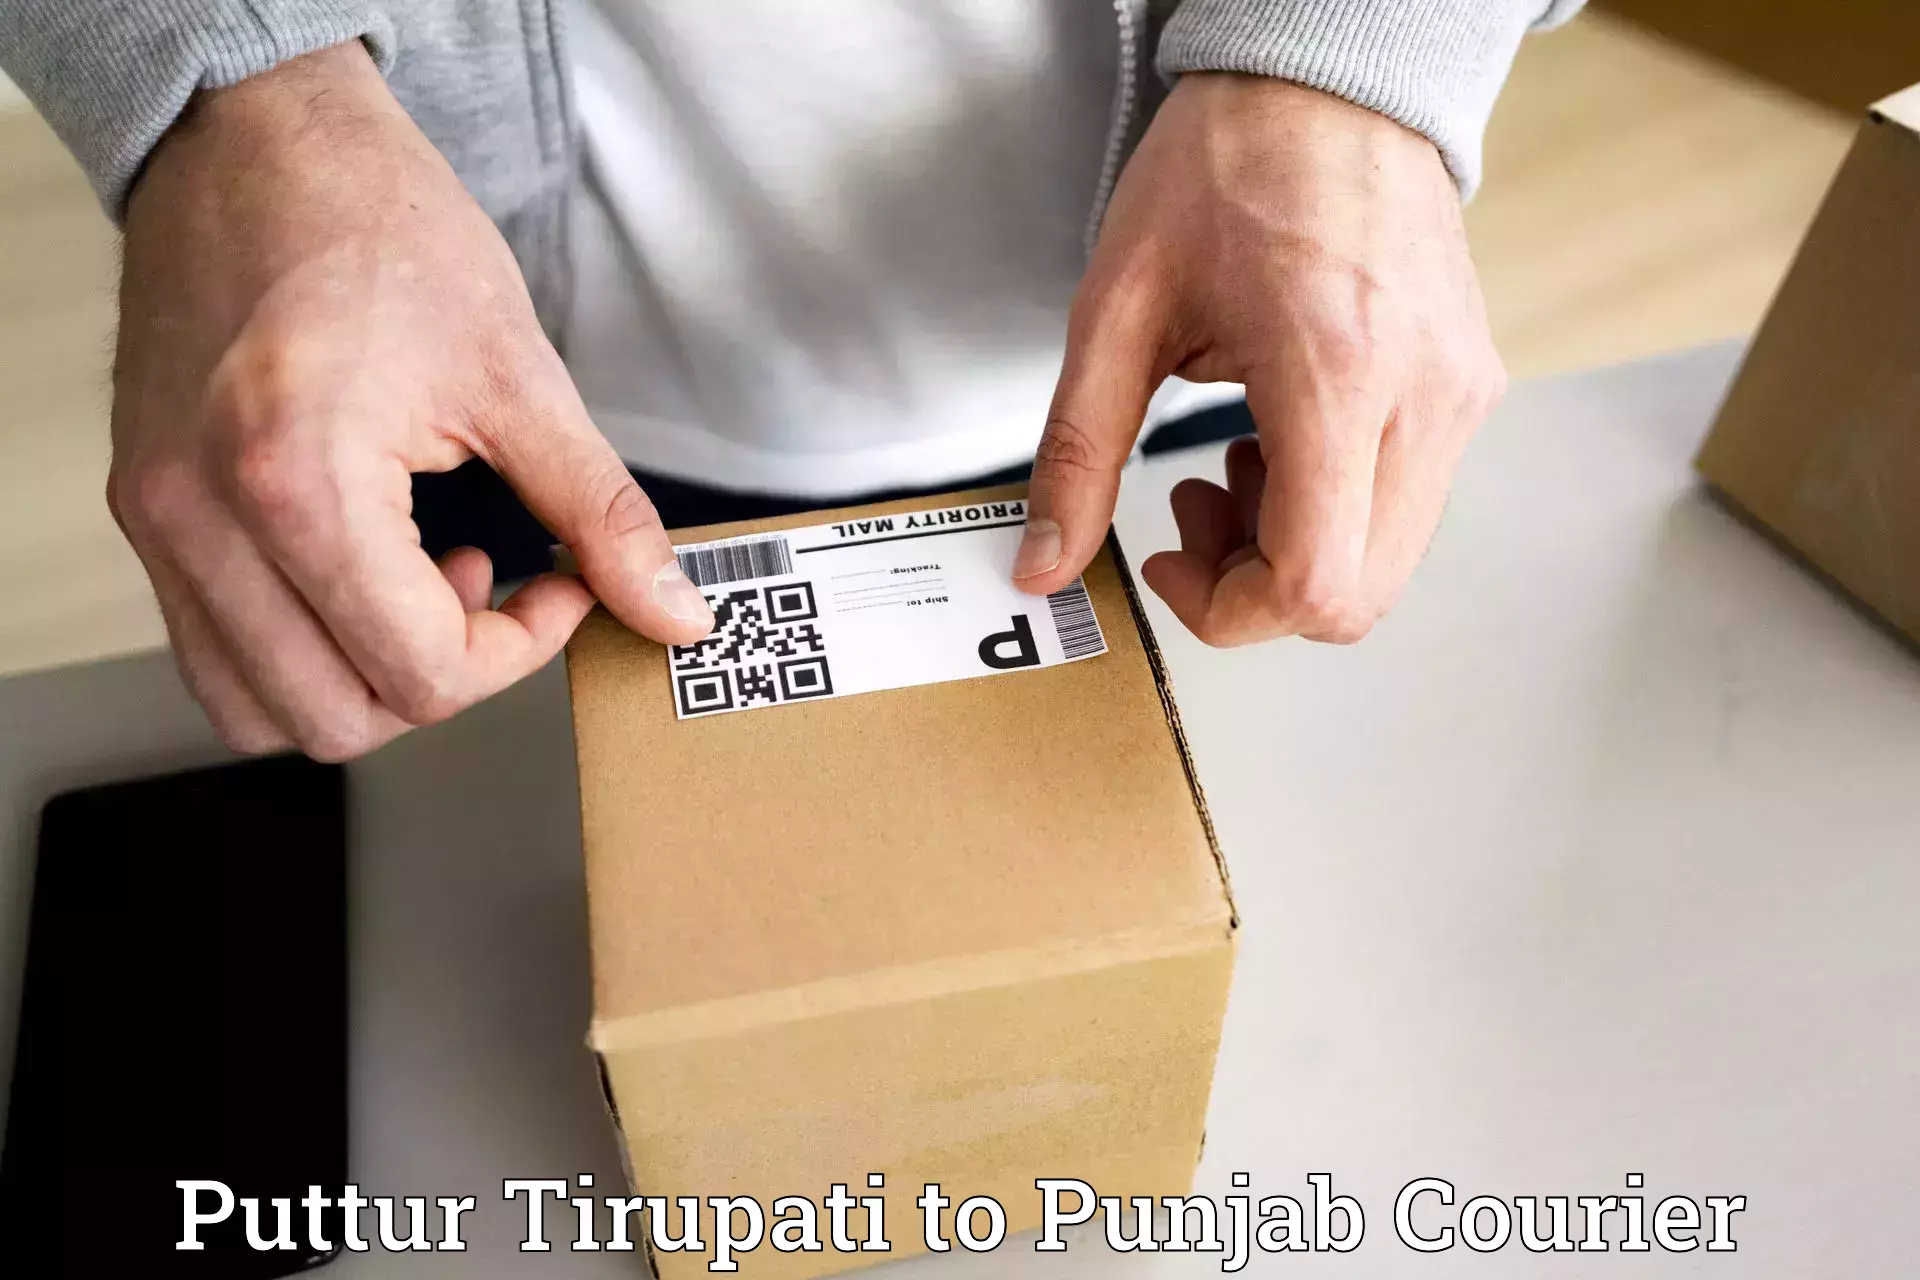 Express delivery network Puttur Tirupati to Punjab